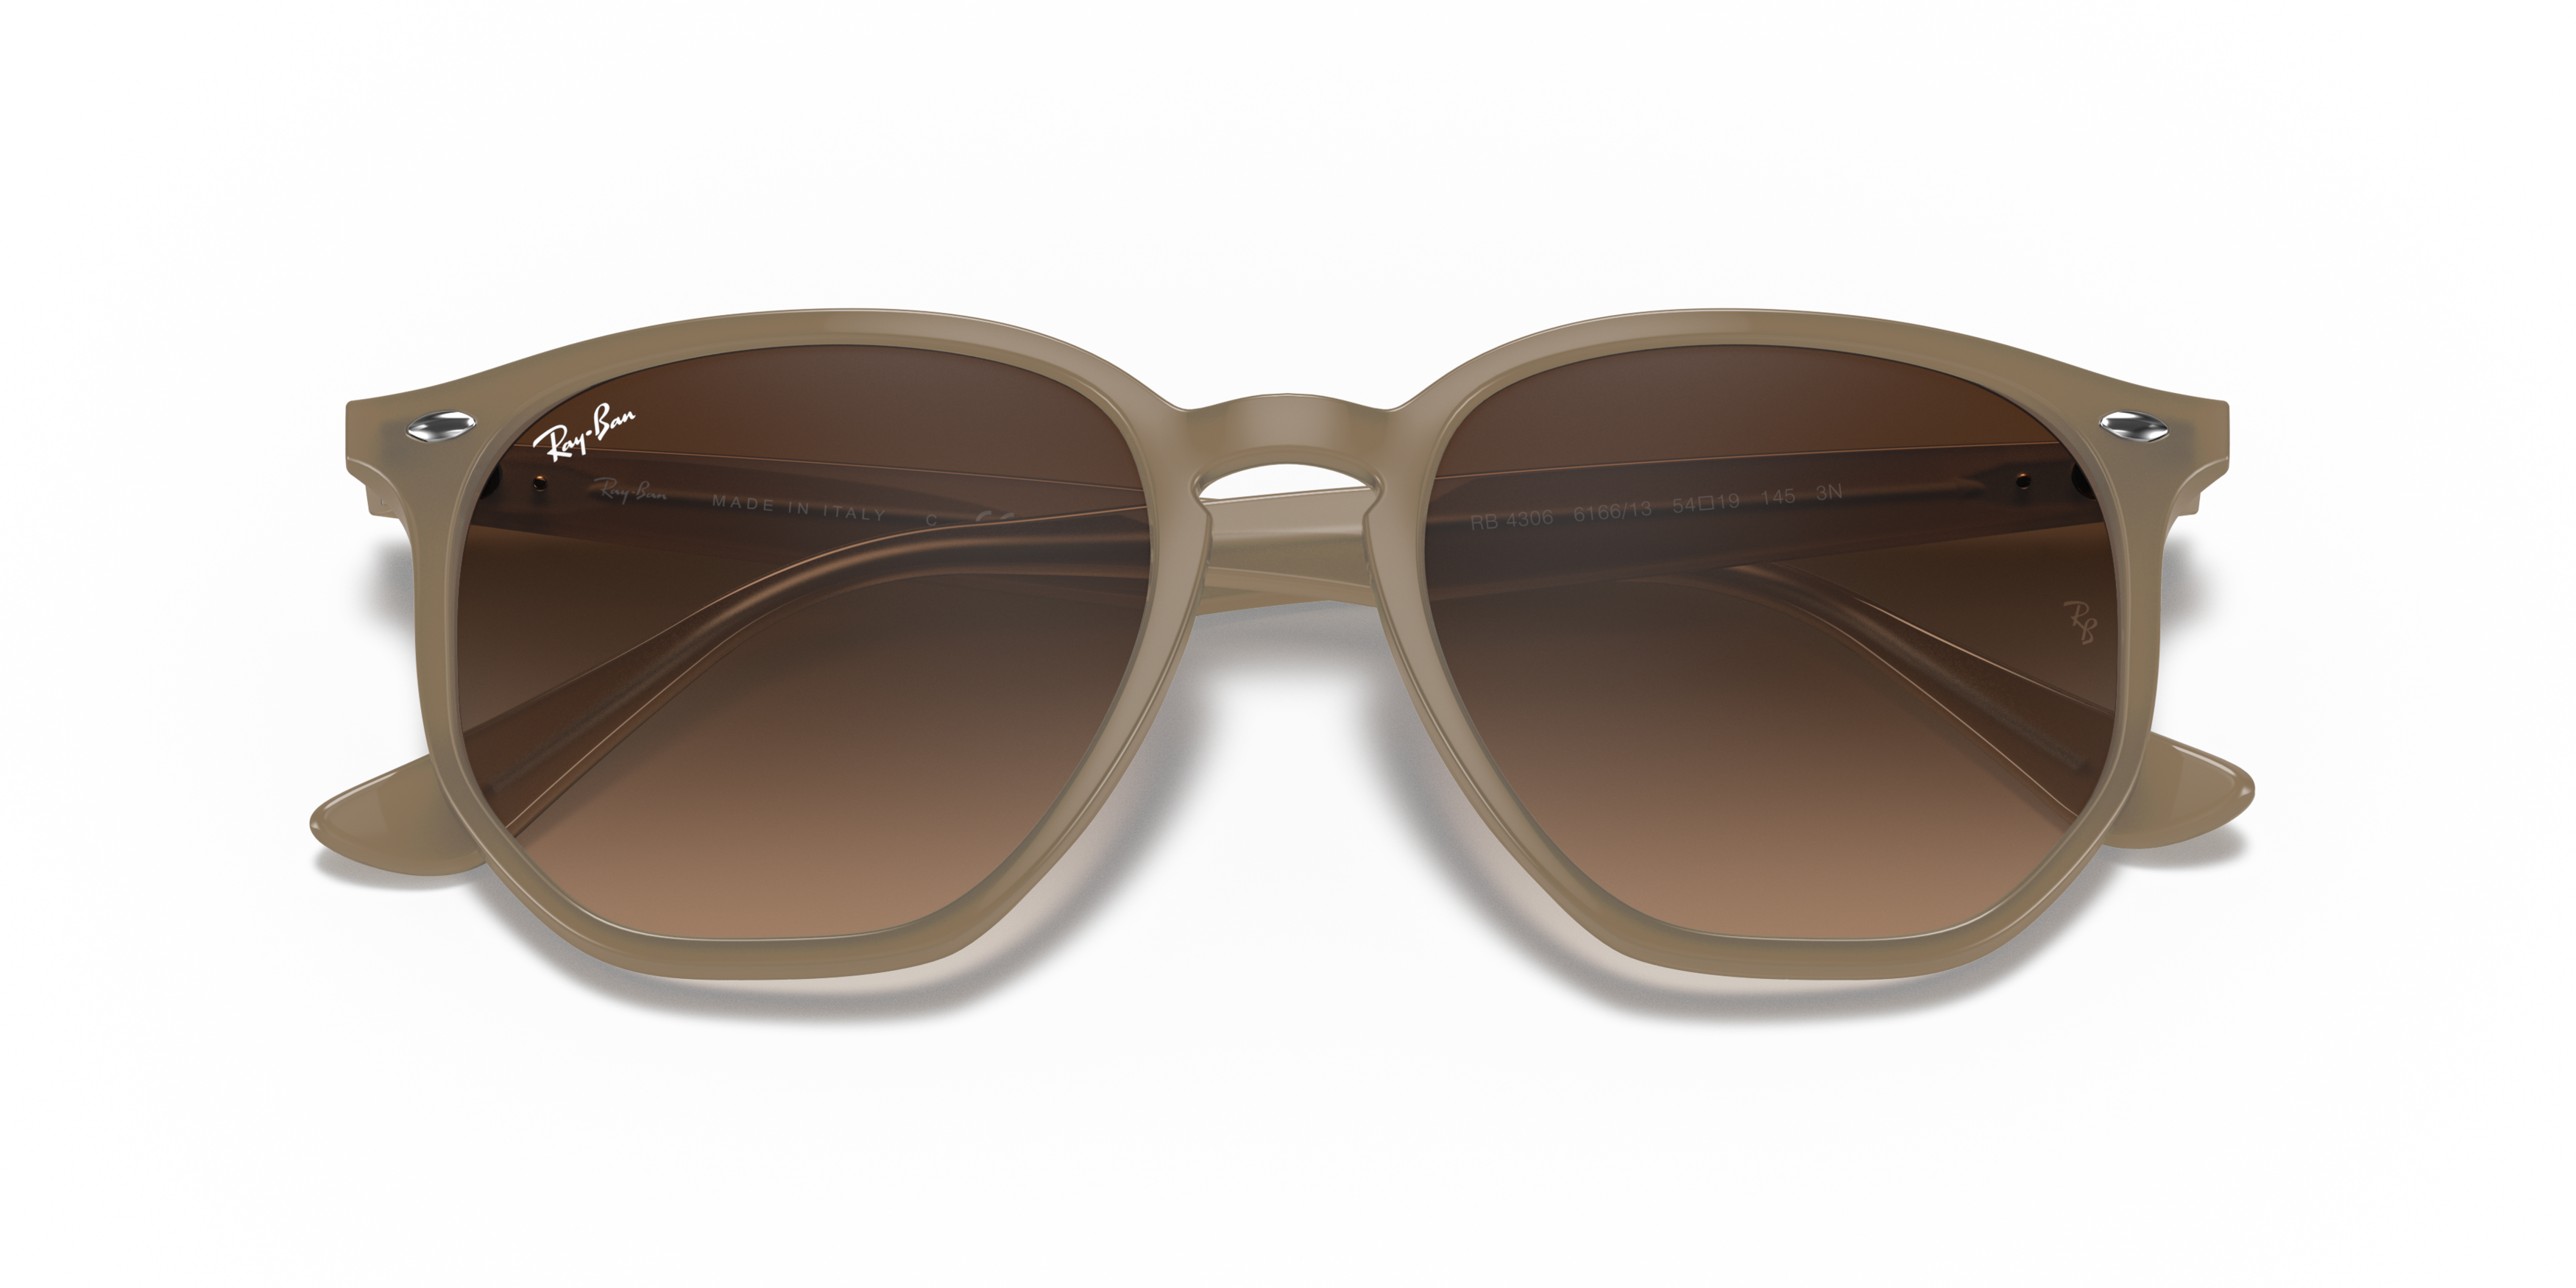 Folded Ray-Ban RB 4306 (710/83) Sunglasses Brown / Tortoise Shell